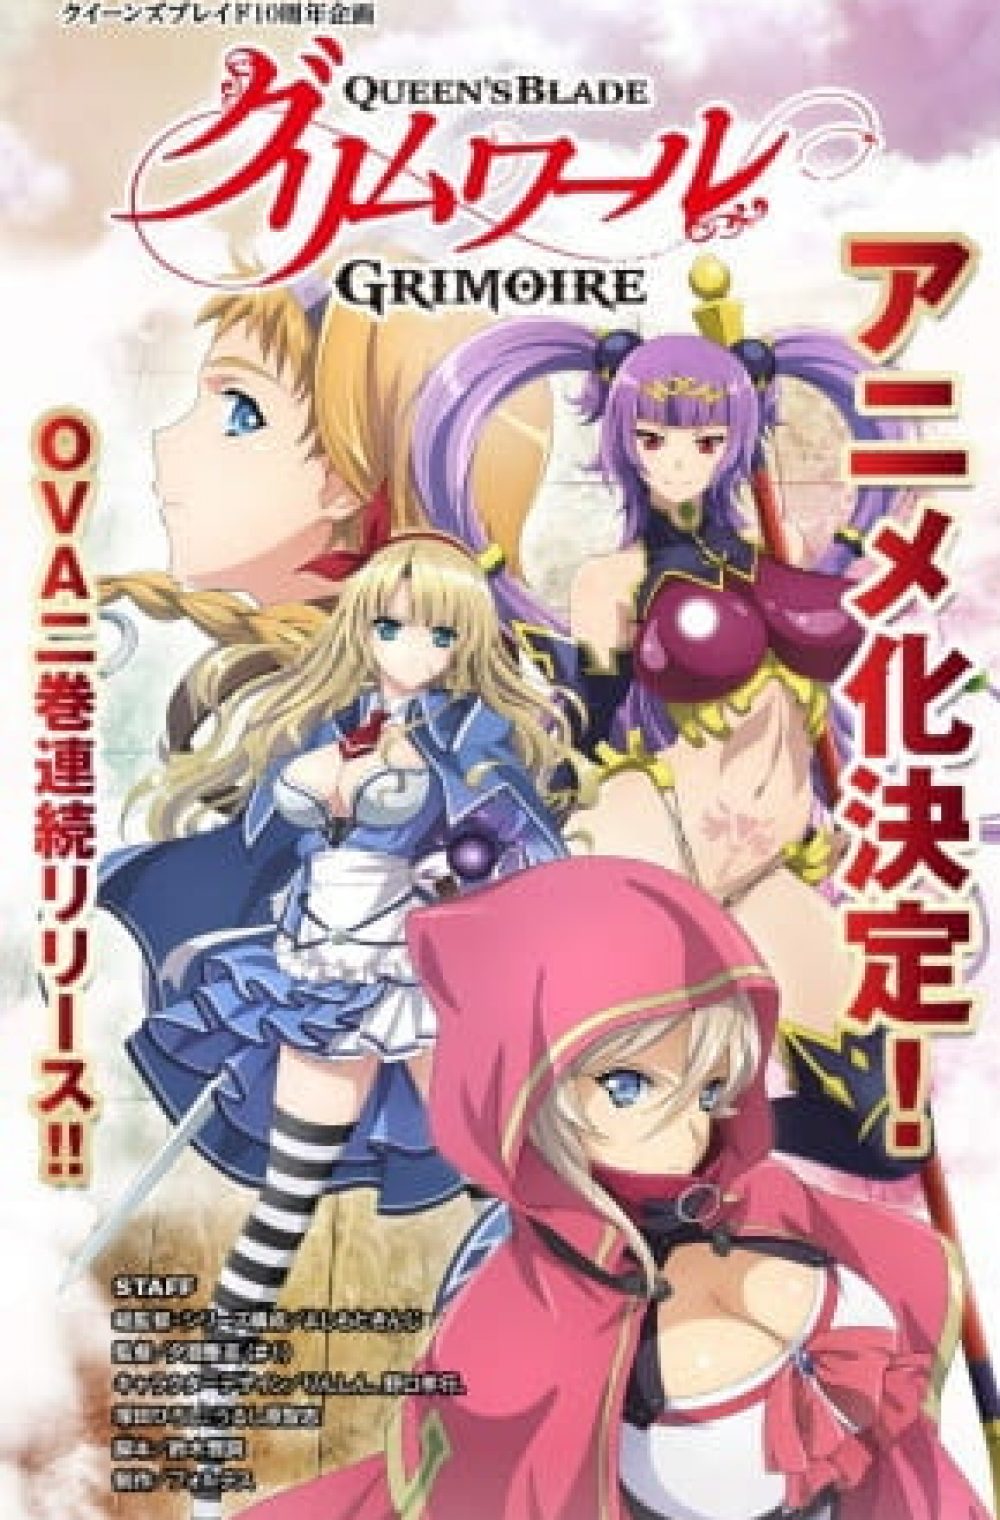 Queen’s Blade: Grimoire (UNCENSORED) + Special